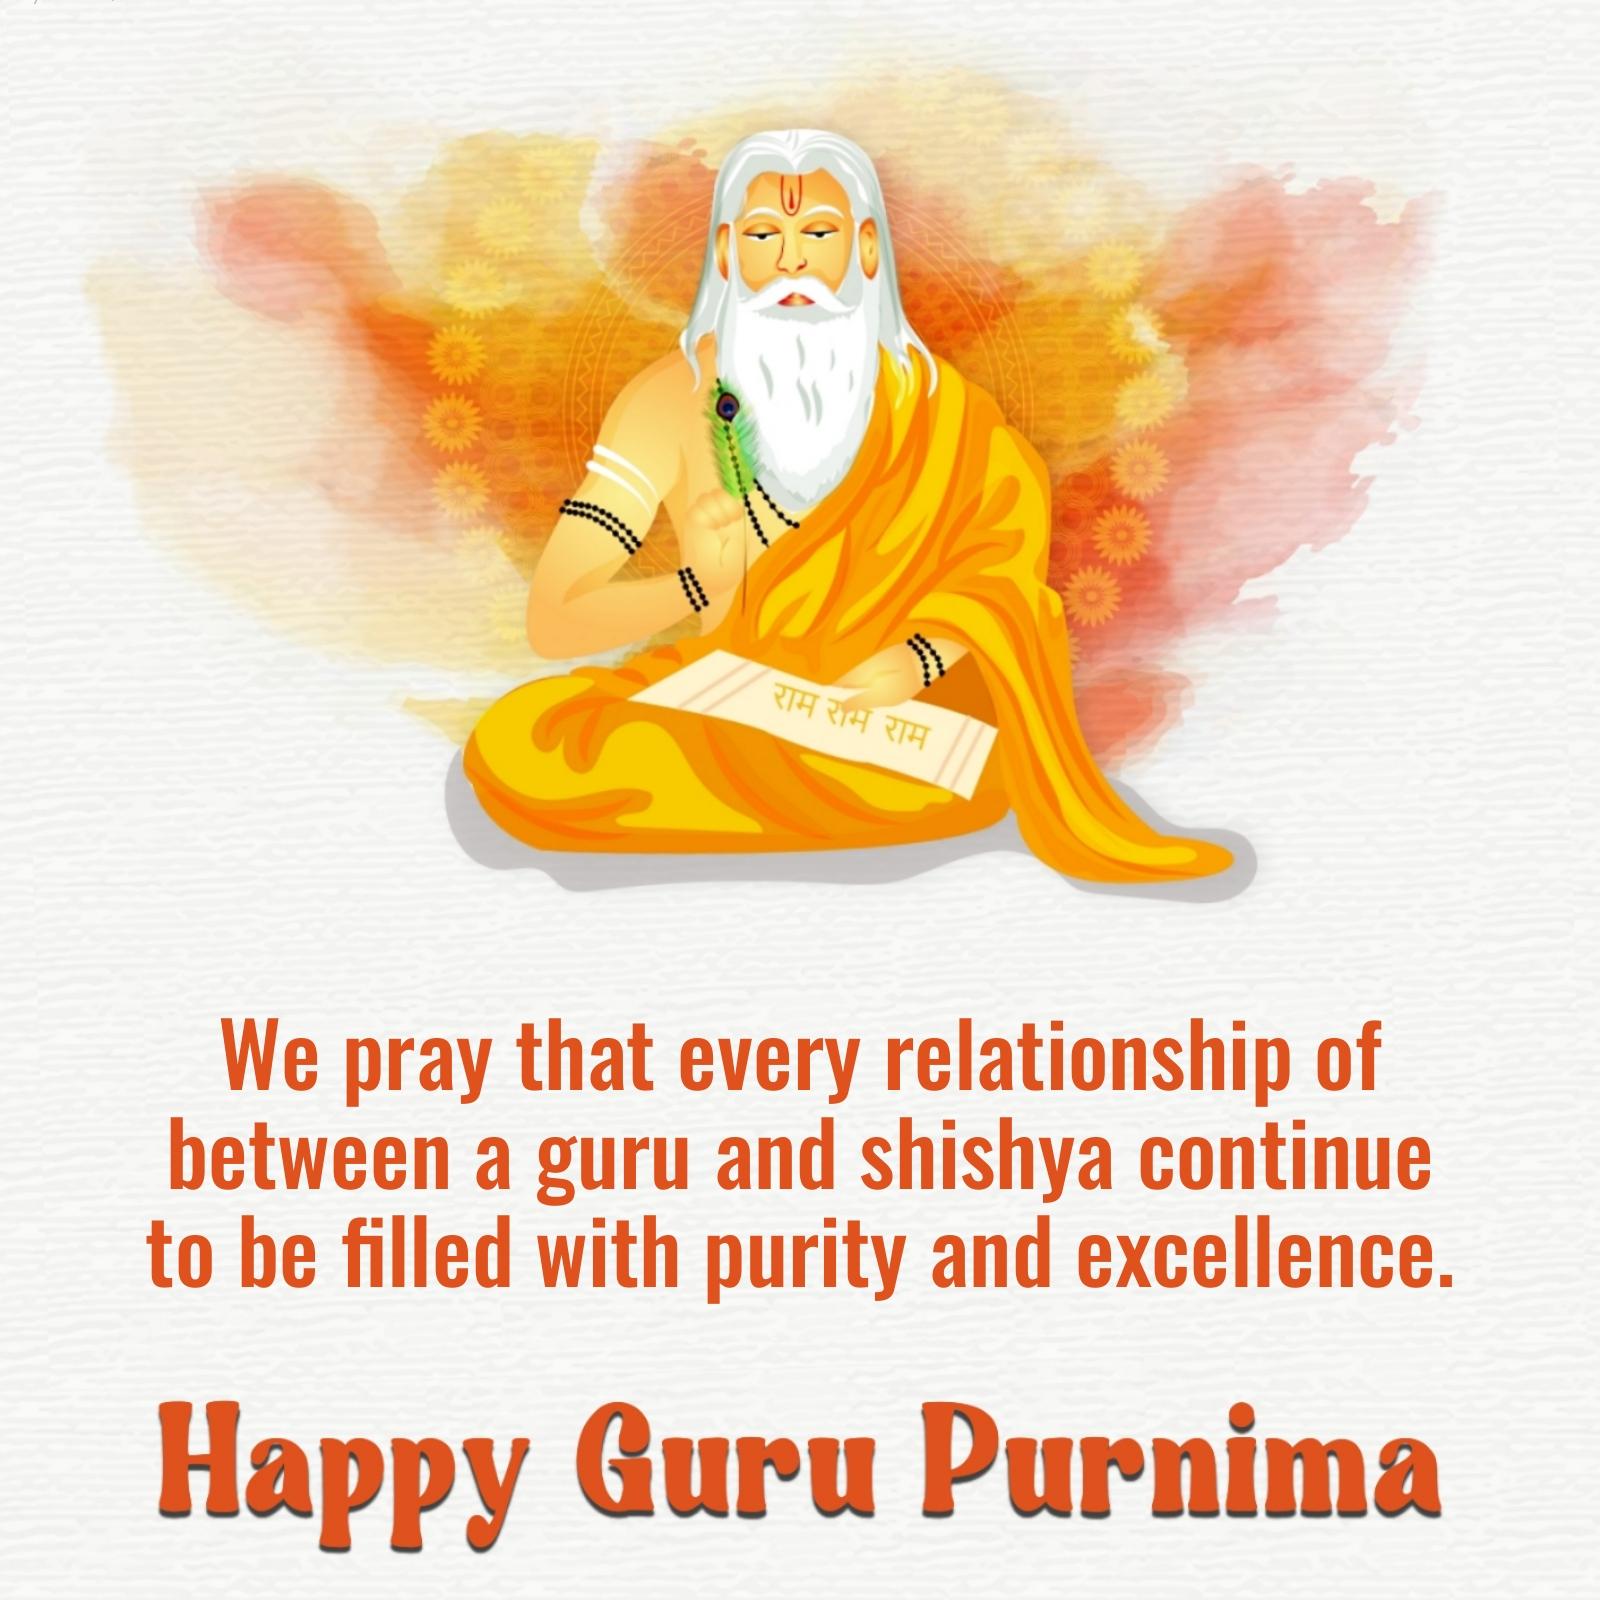 We pray that every relationship of between a guru and shishya